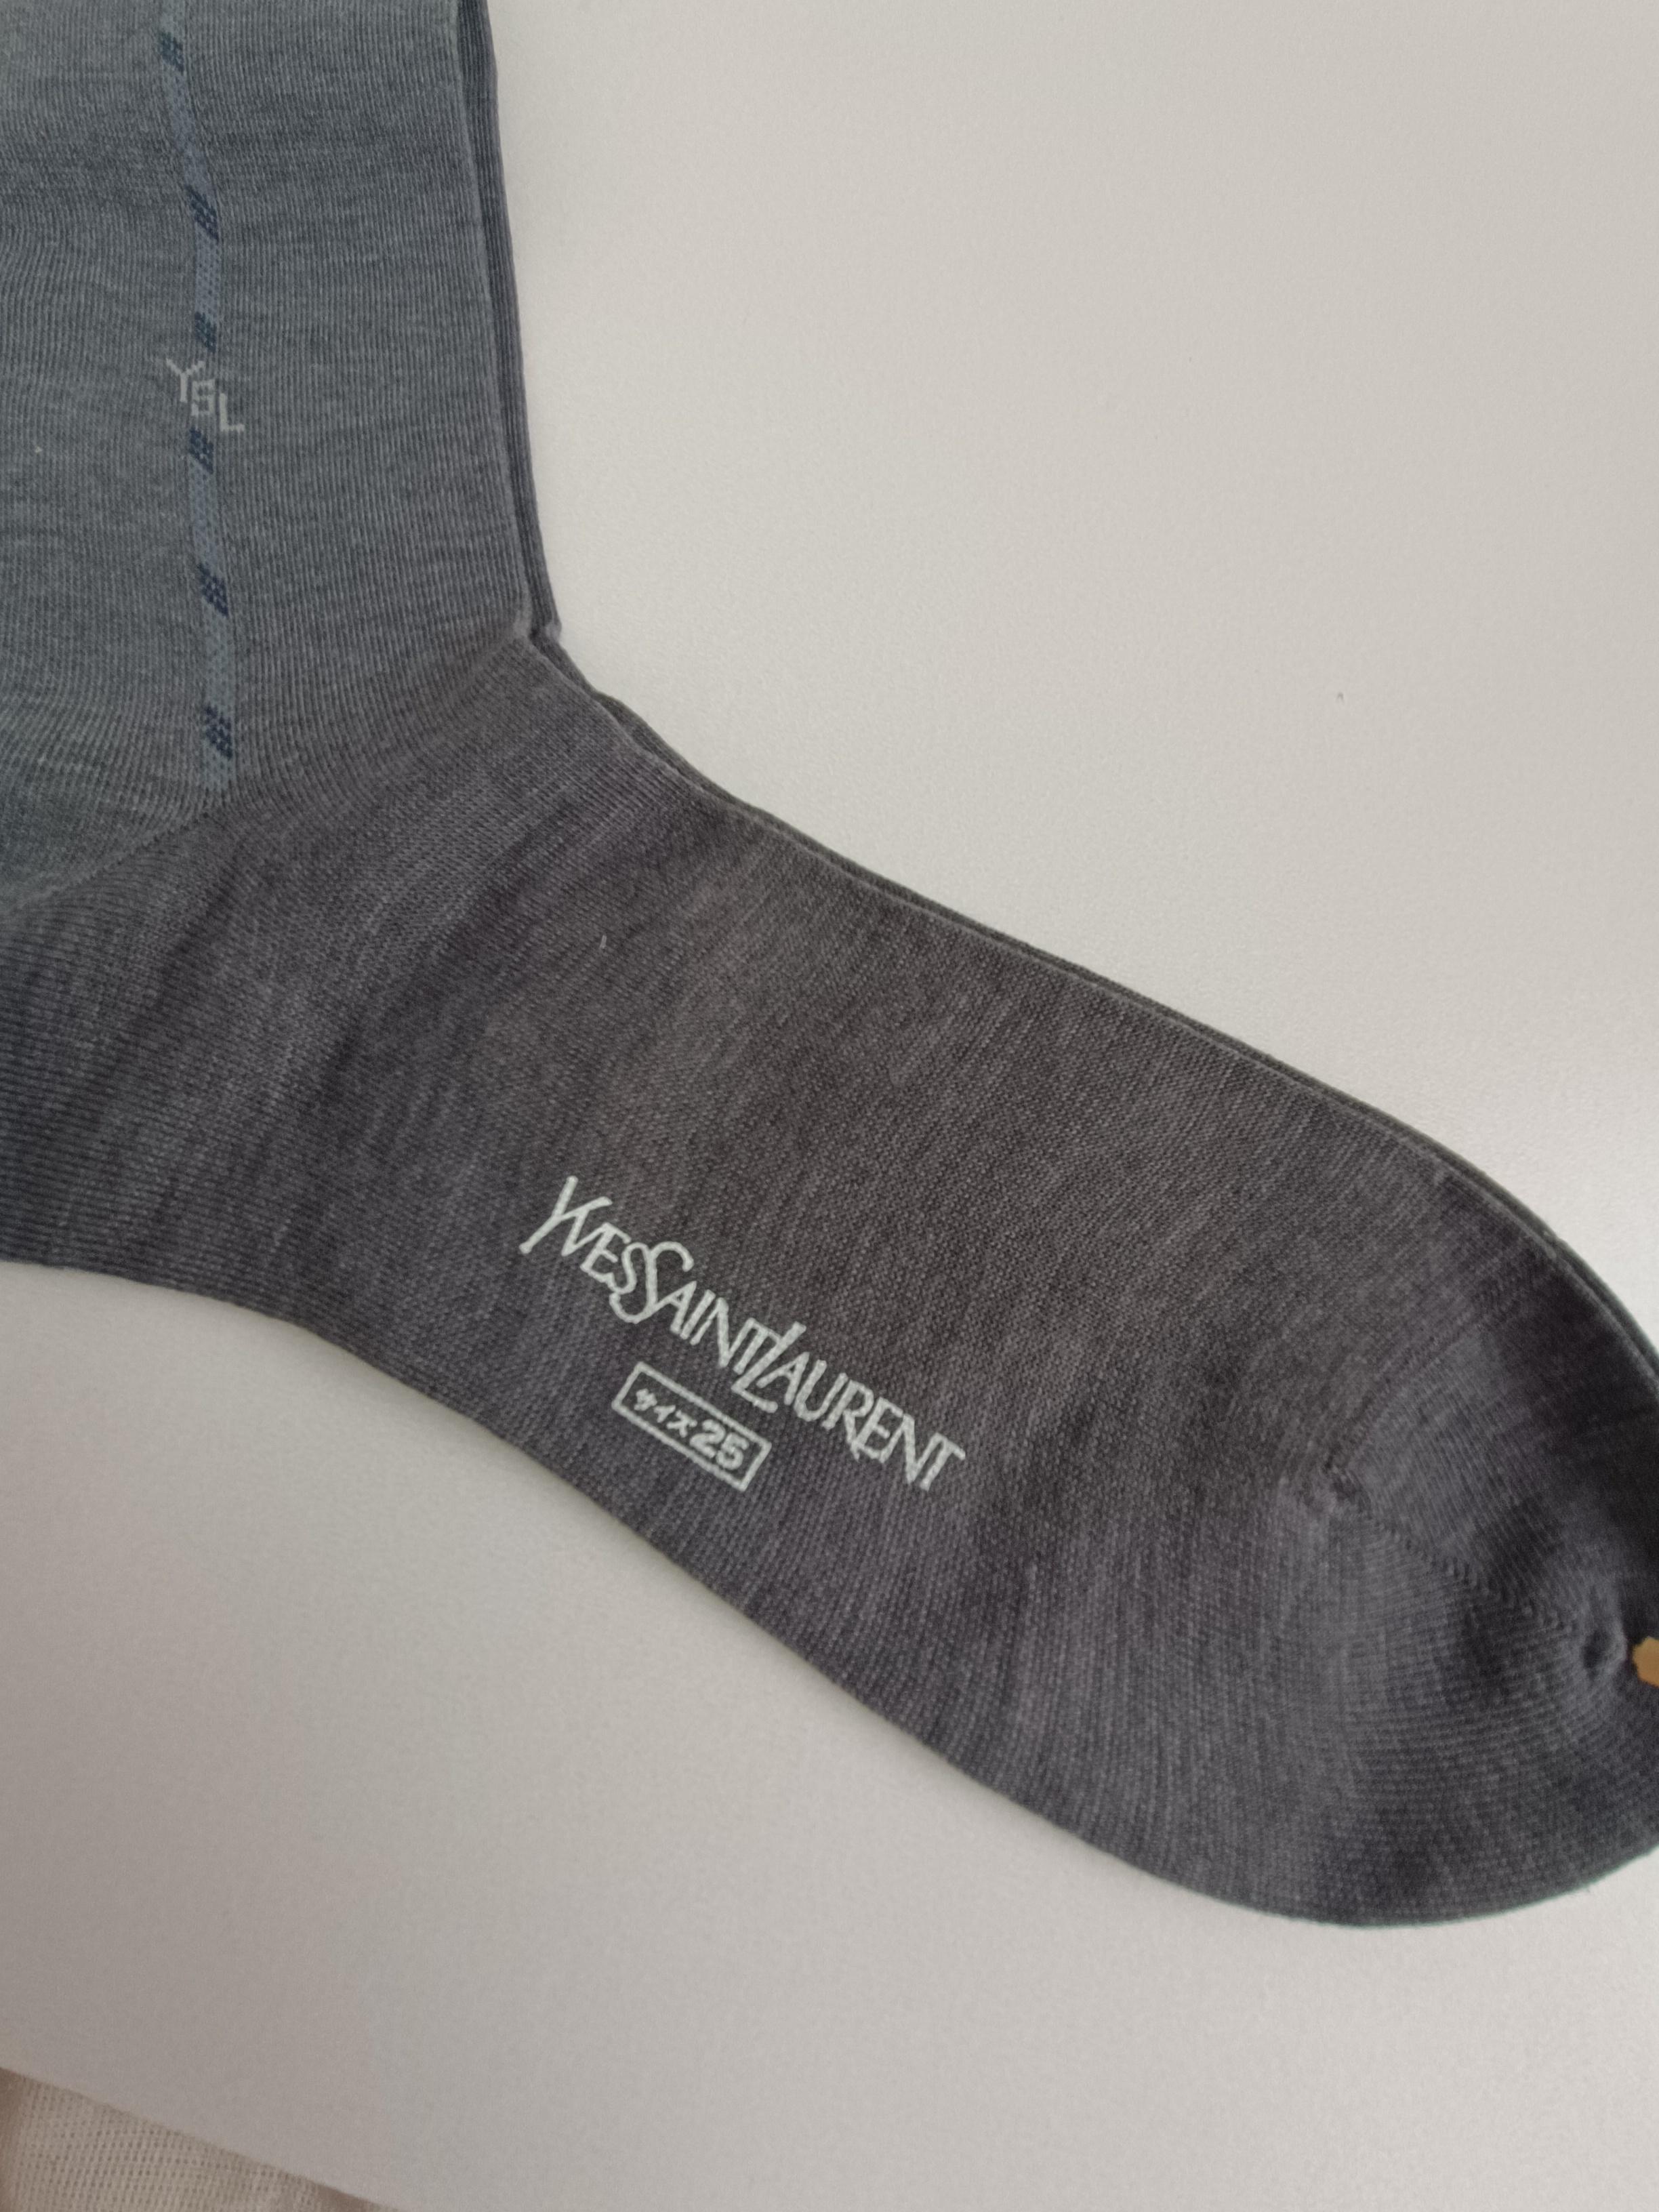 Authentische Yves Saint Laurent Vintage Herren Socken YSL im Angebot 4